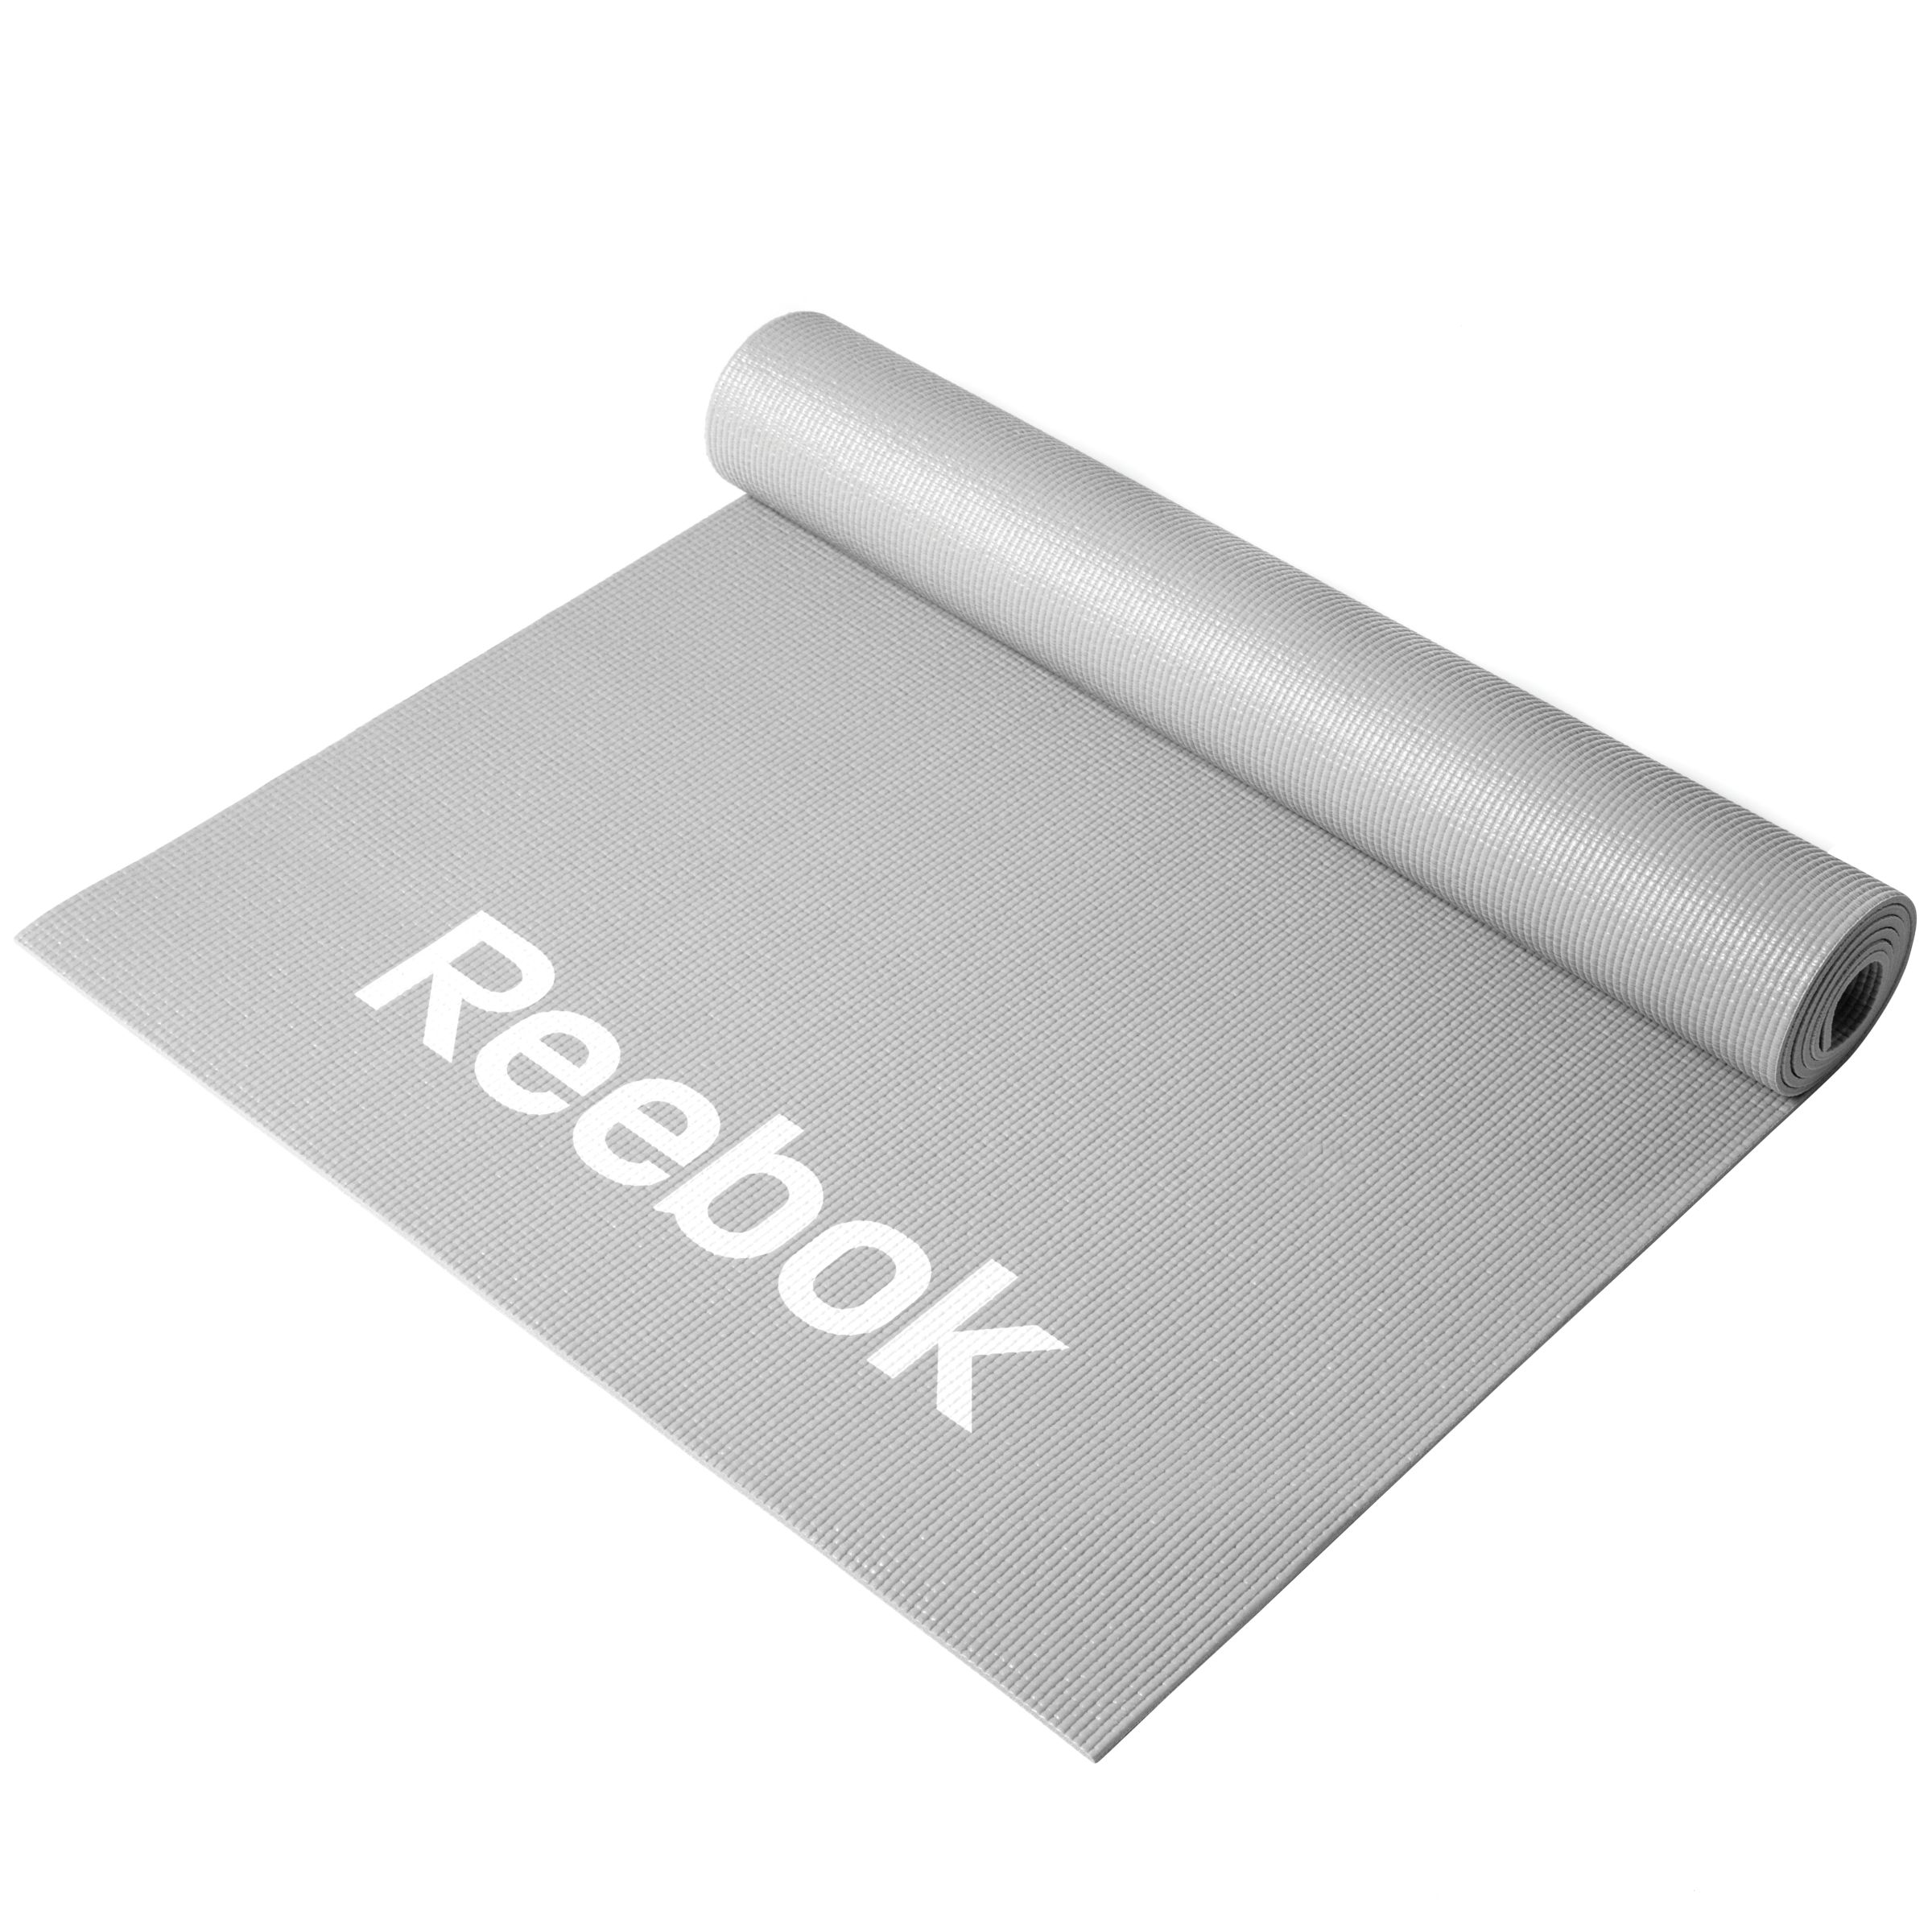 reebok exercise mat